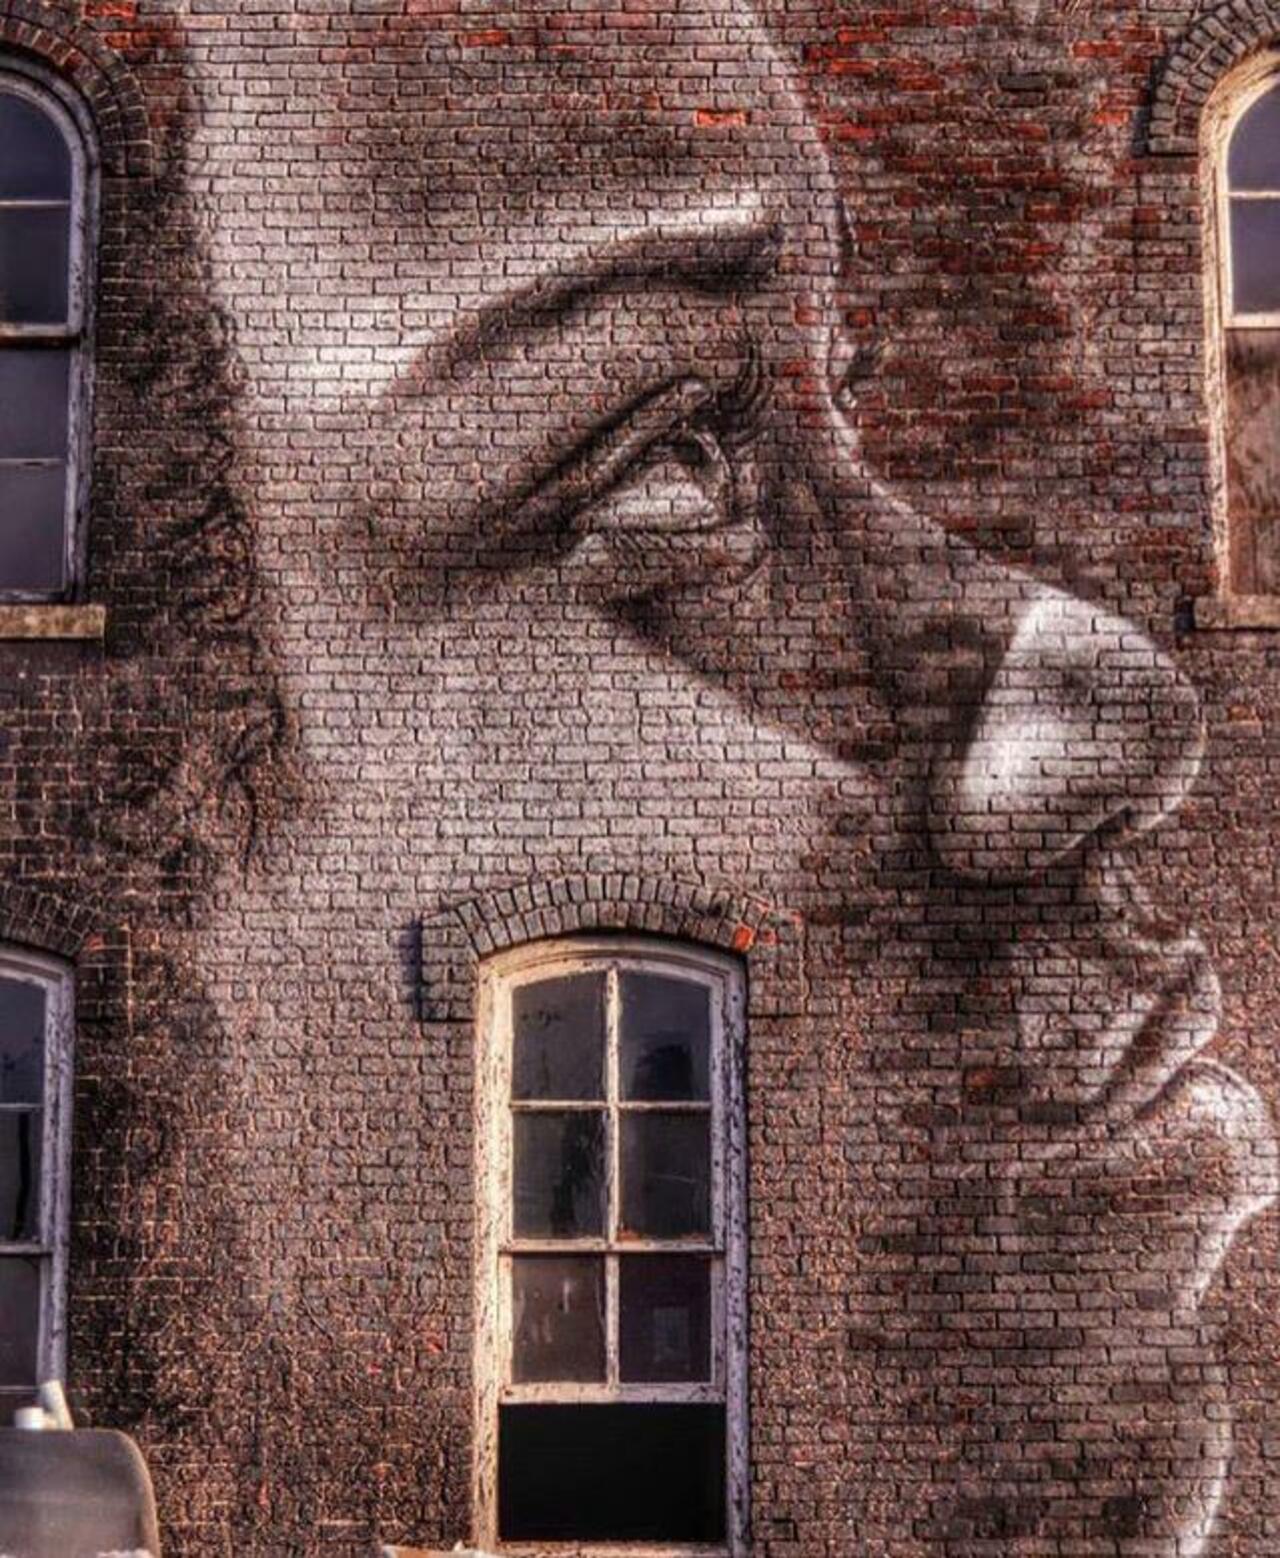 RT @BenWest: RT @72SLICK “New tumblr post: “New Street Art by RONE

#art #graffiti #mural #streetart http://t.co/SjrQzqerok” …” …